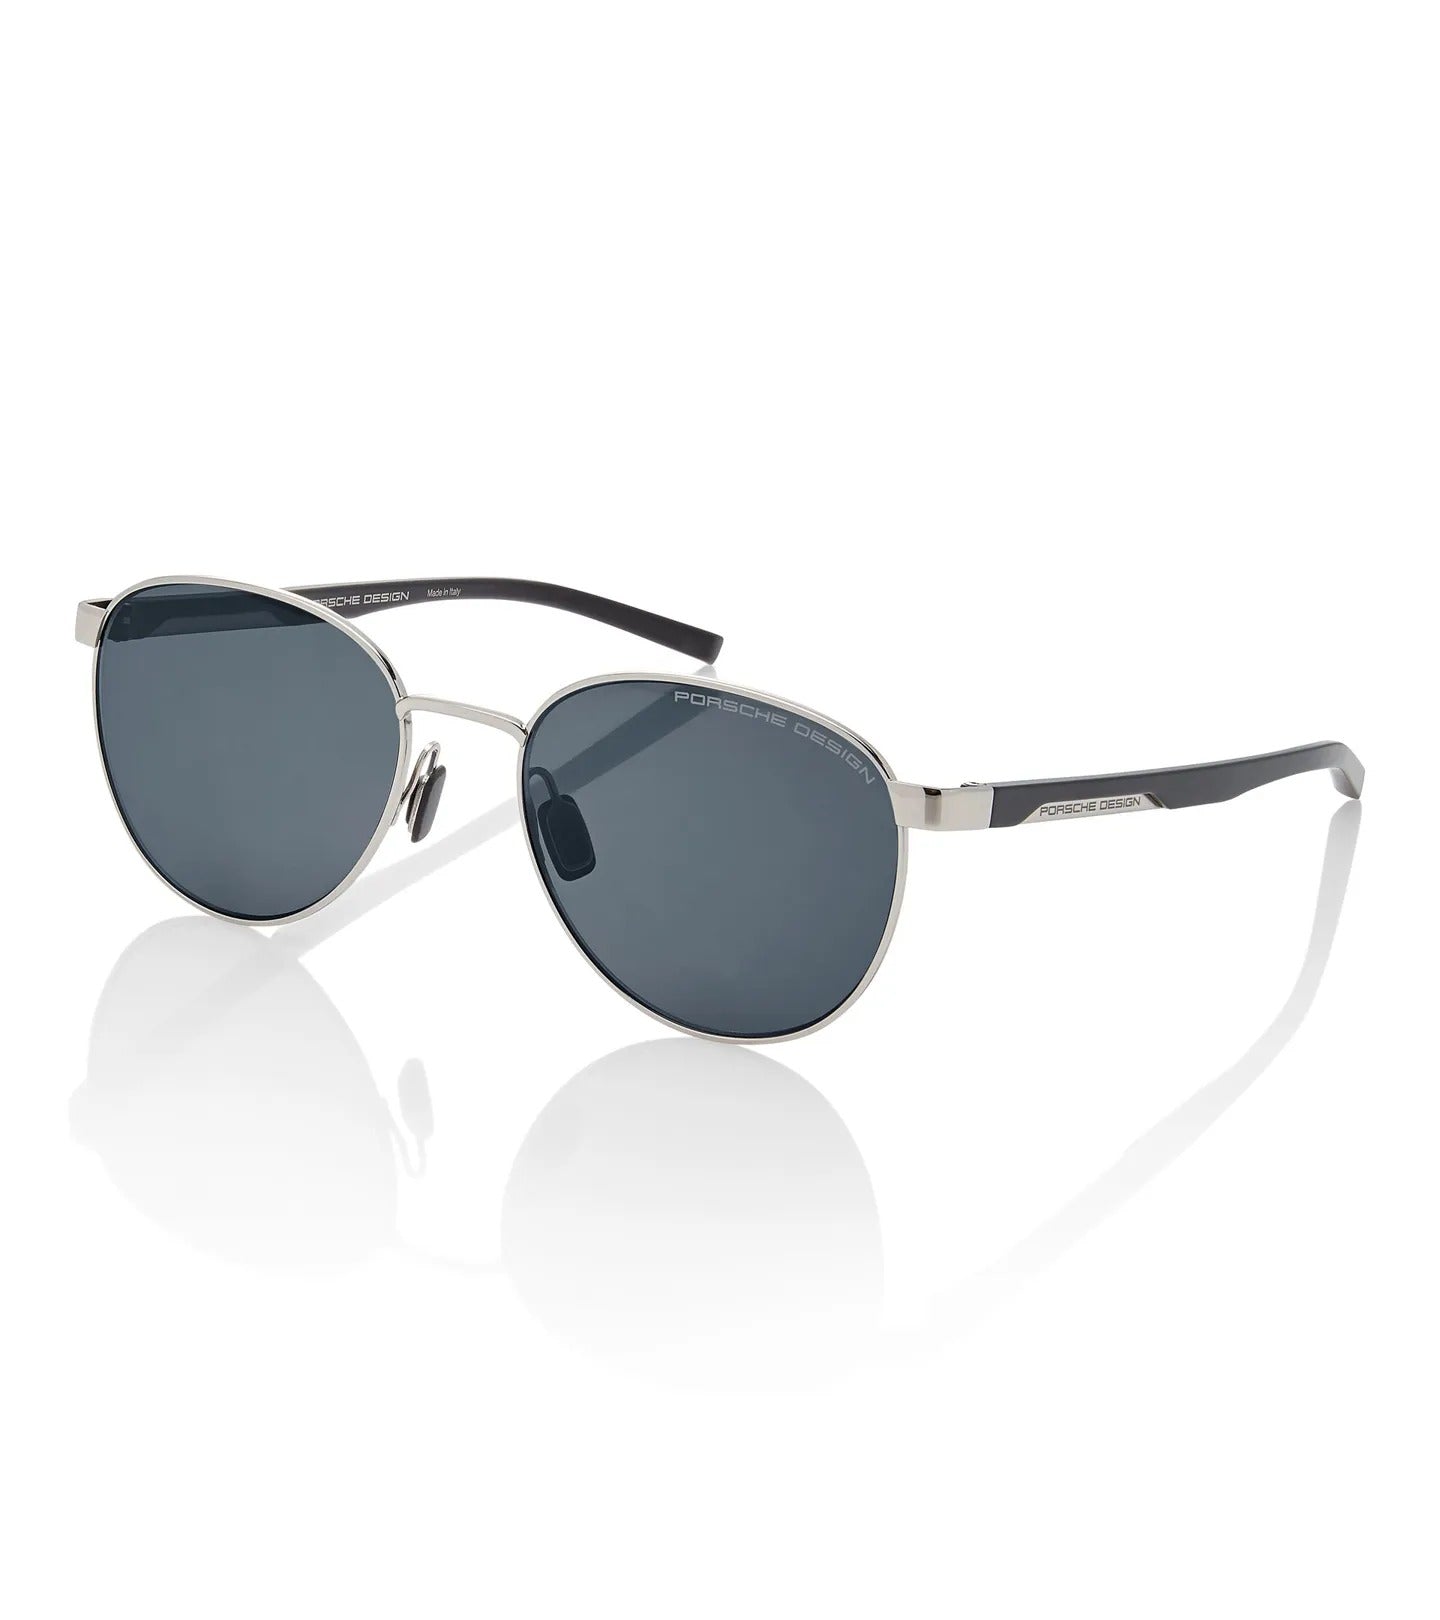 Porsche Design Men's Blue-Black Round Sunglasses